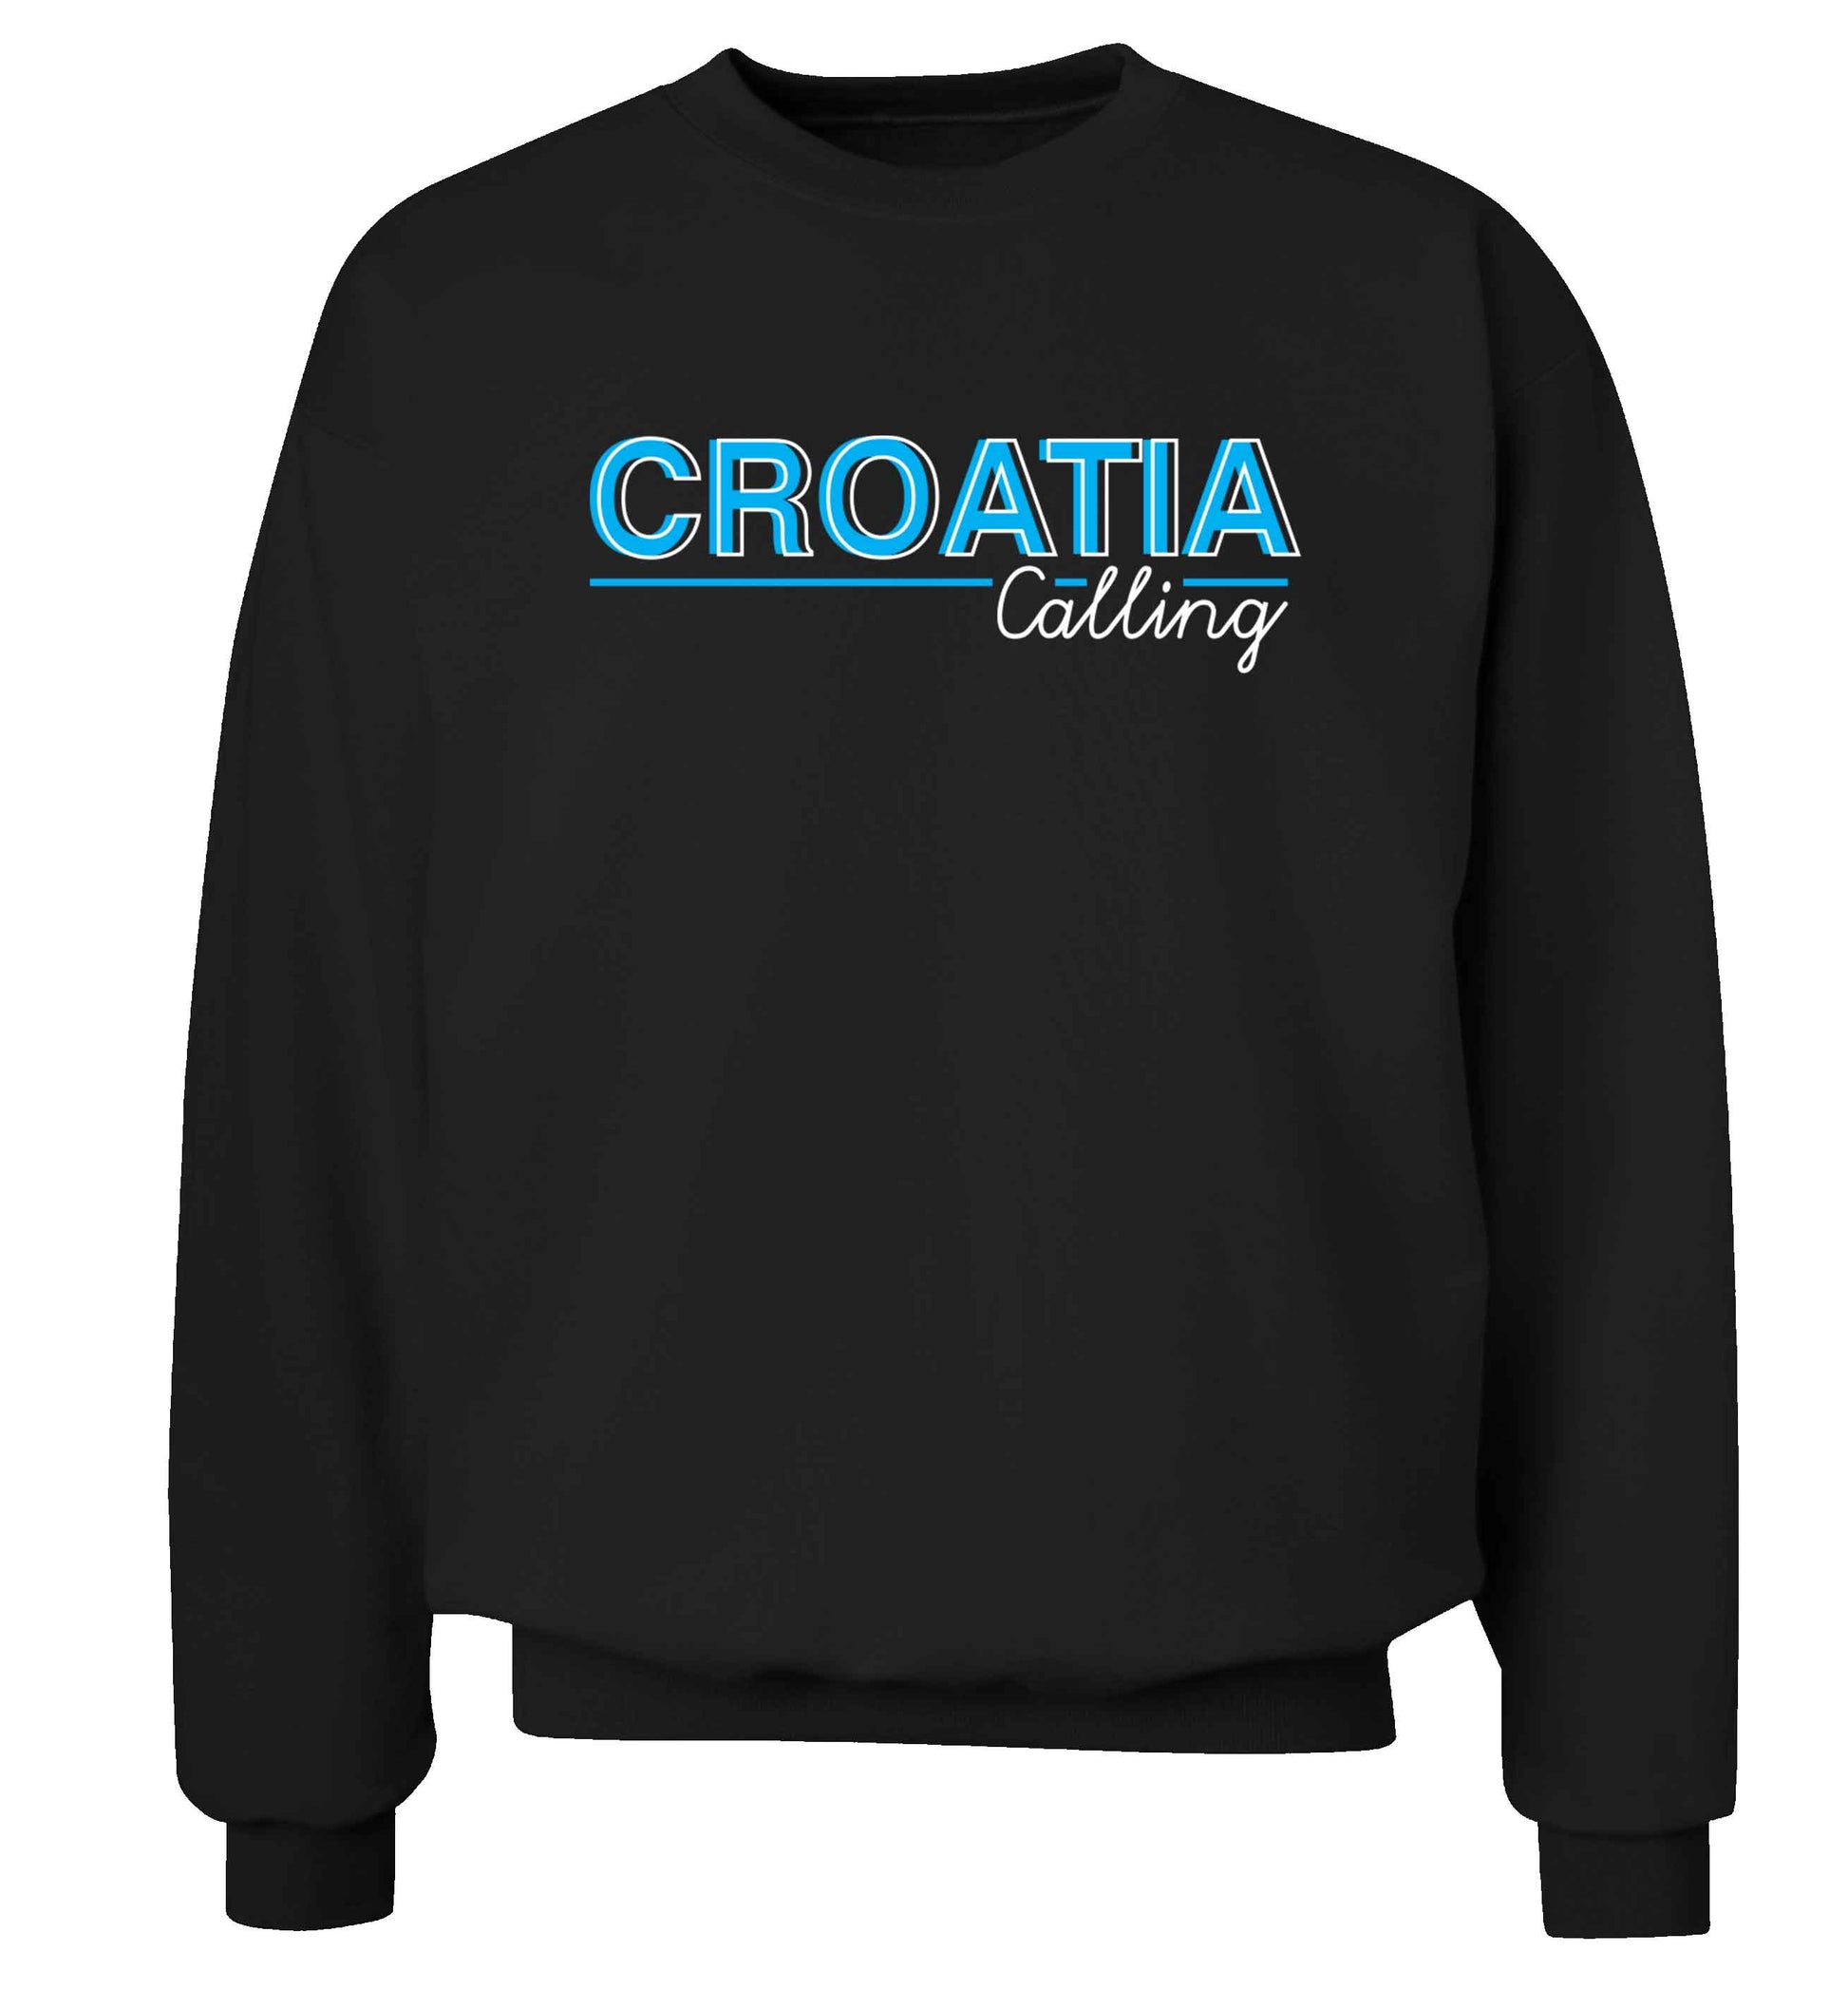 Croatia calling Adult's unisex black Sweater 2XL